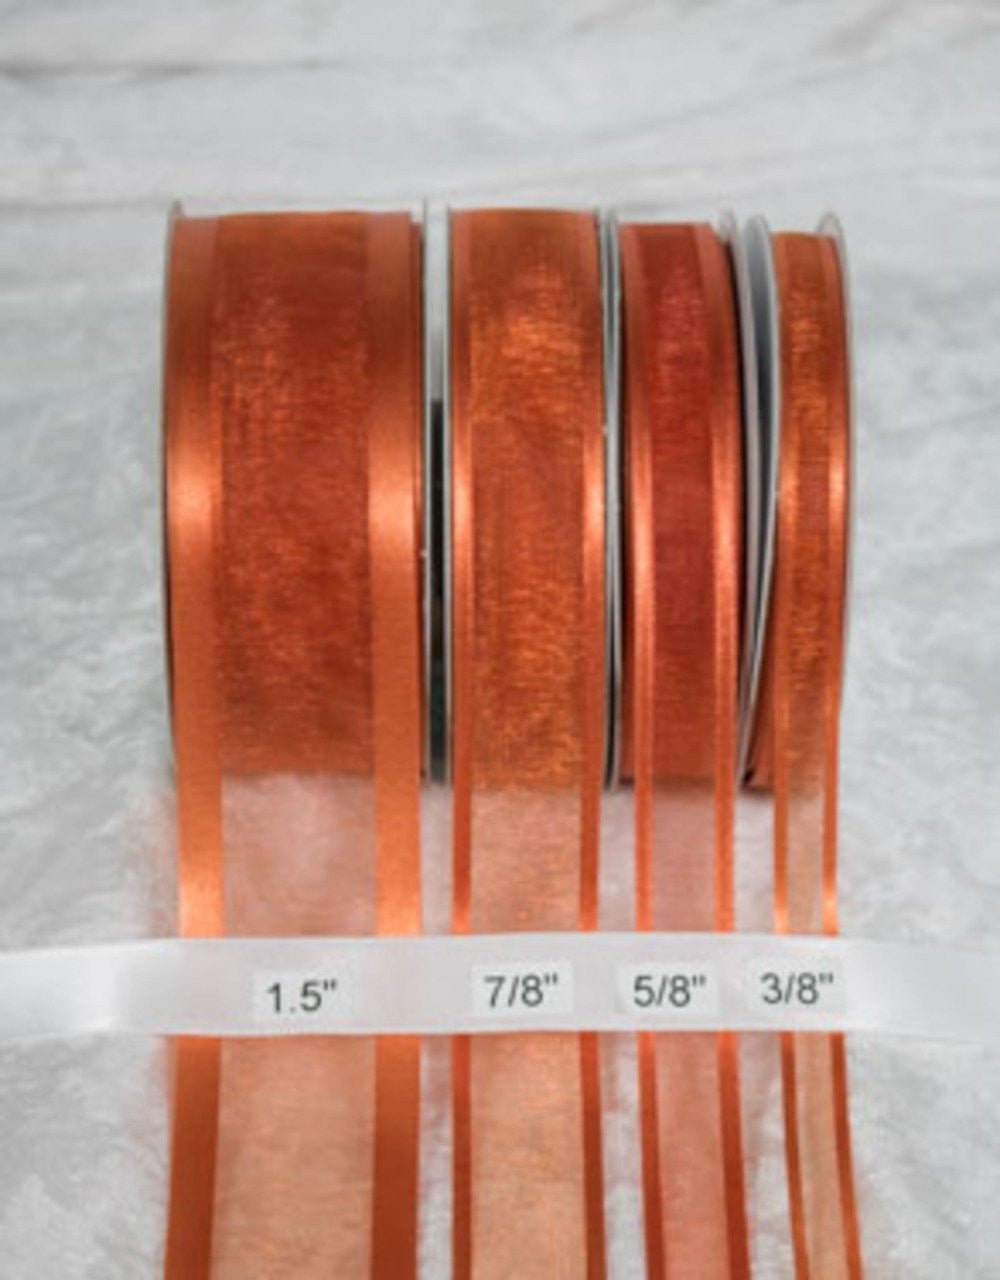 25 yards-Copper w/ Satin Trim Ribbon (3/8", 5/8", 7/8", 1.5" )